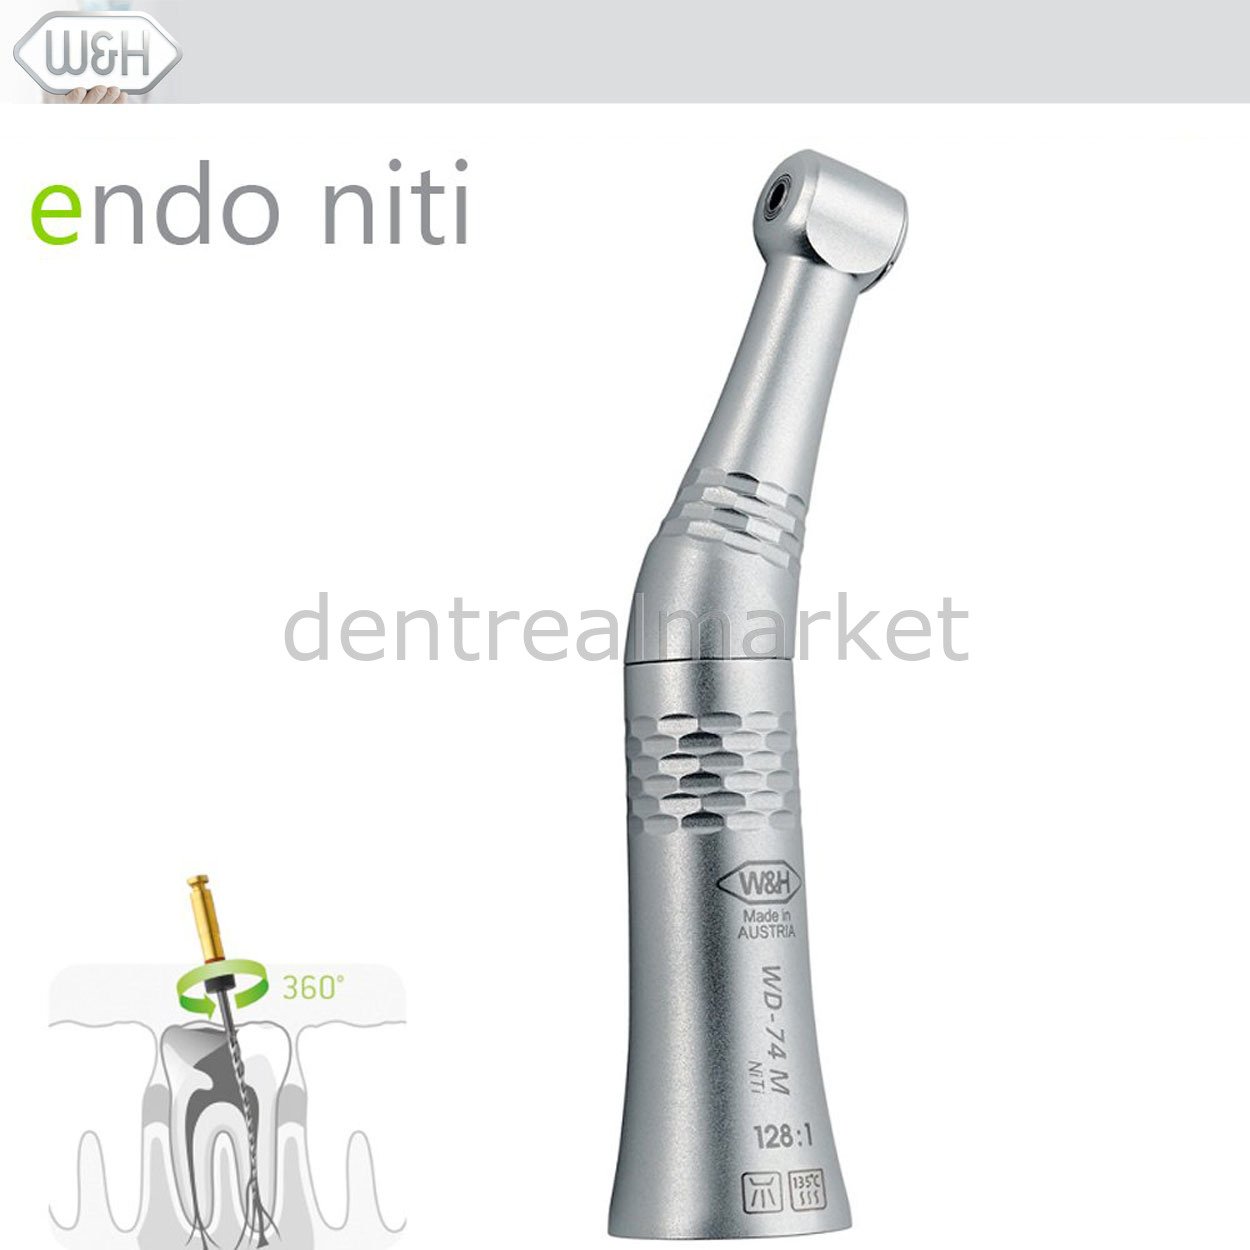 Endo Niti Endodontik Angldruva 128:1 - WD-74M